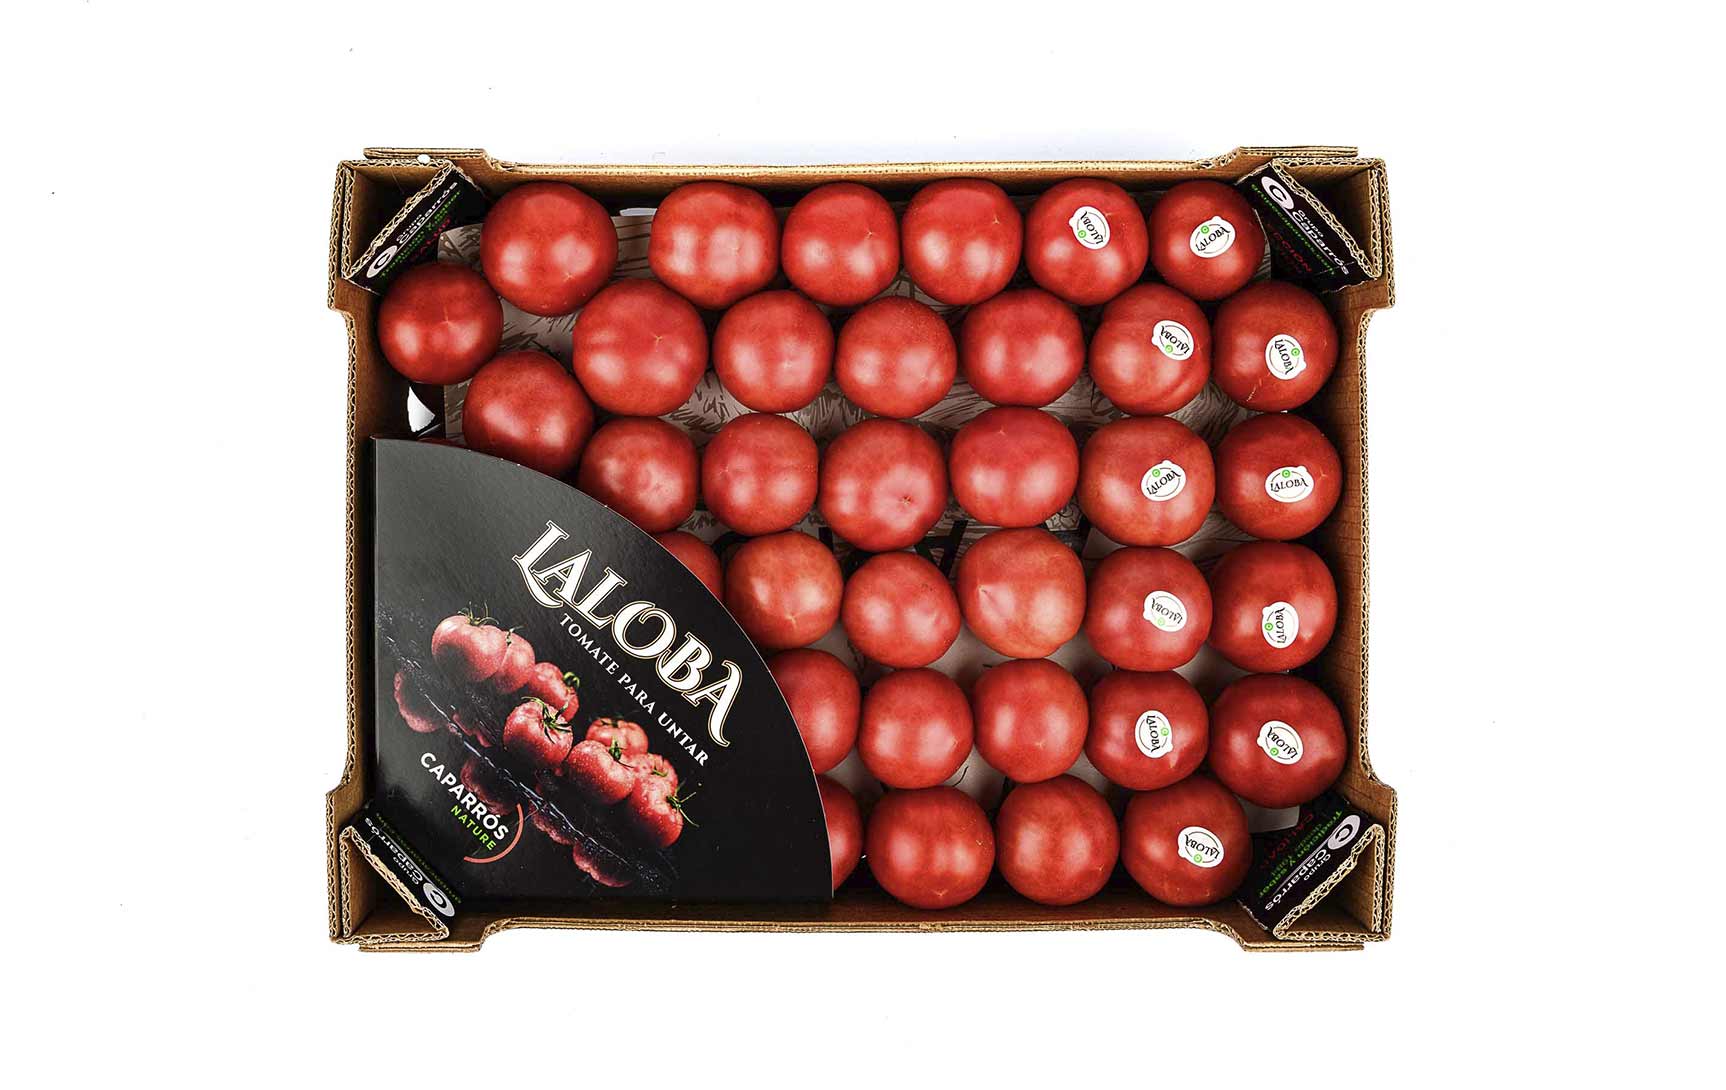 Tomates Laloba - Caparrós